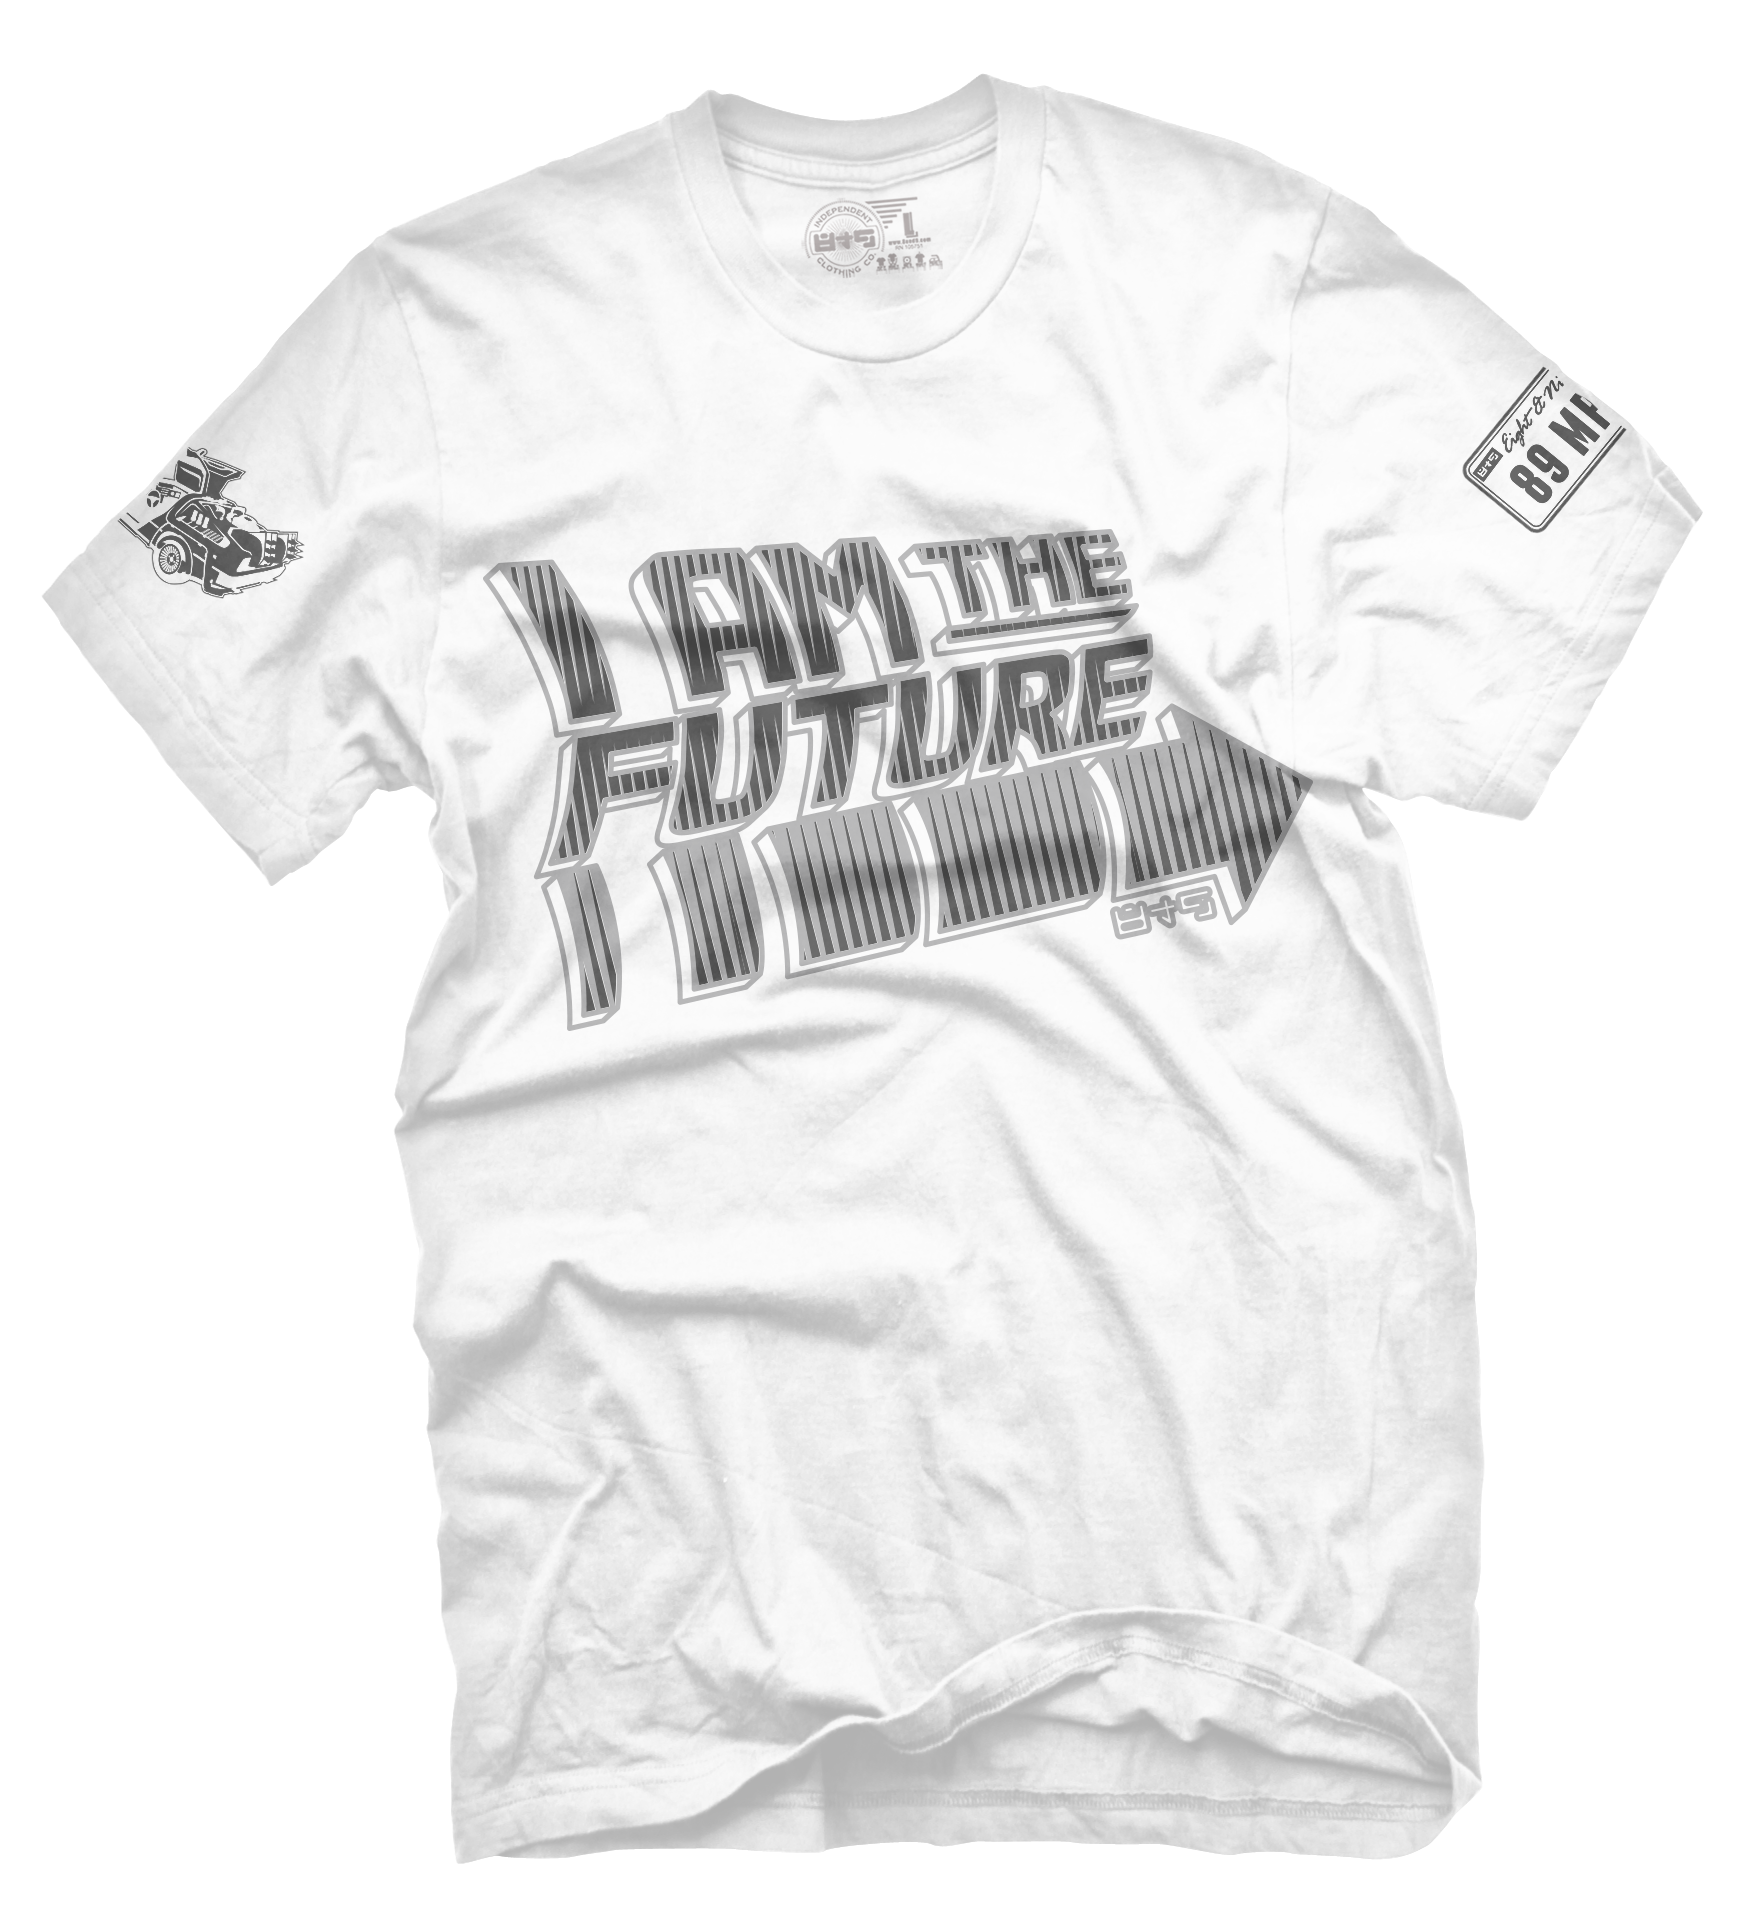 I Am The Future Cool Grey T Shirt - 2